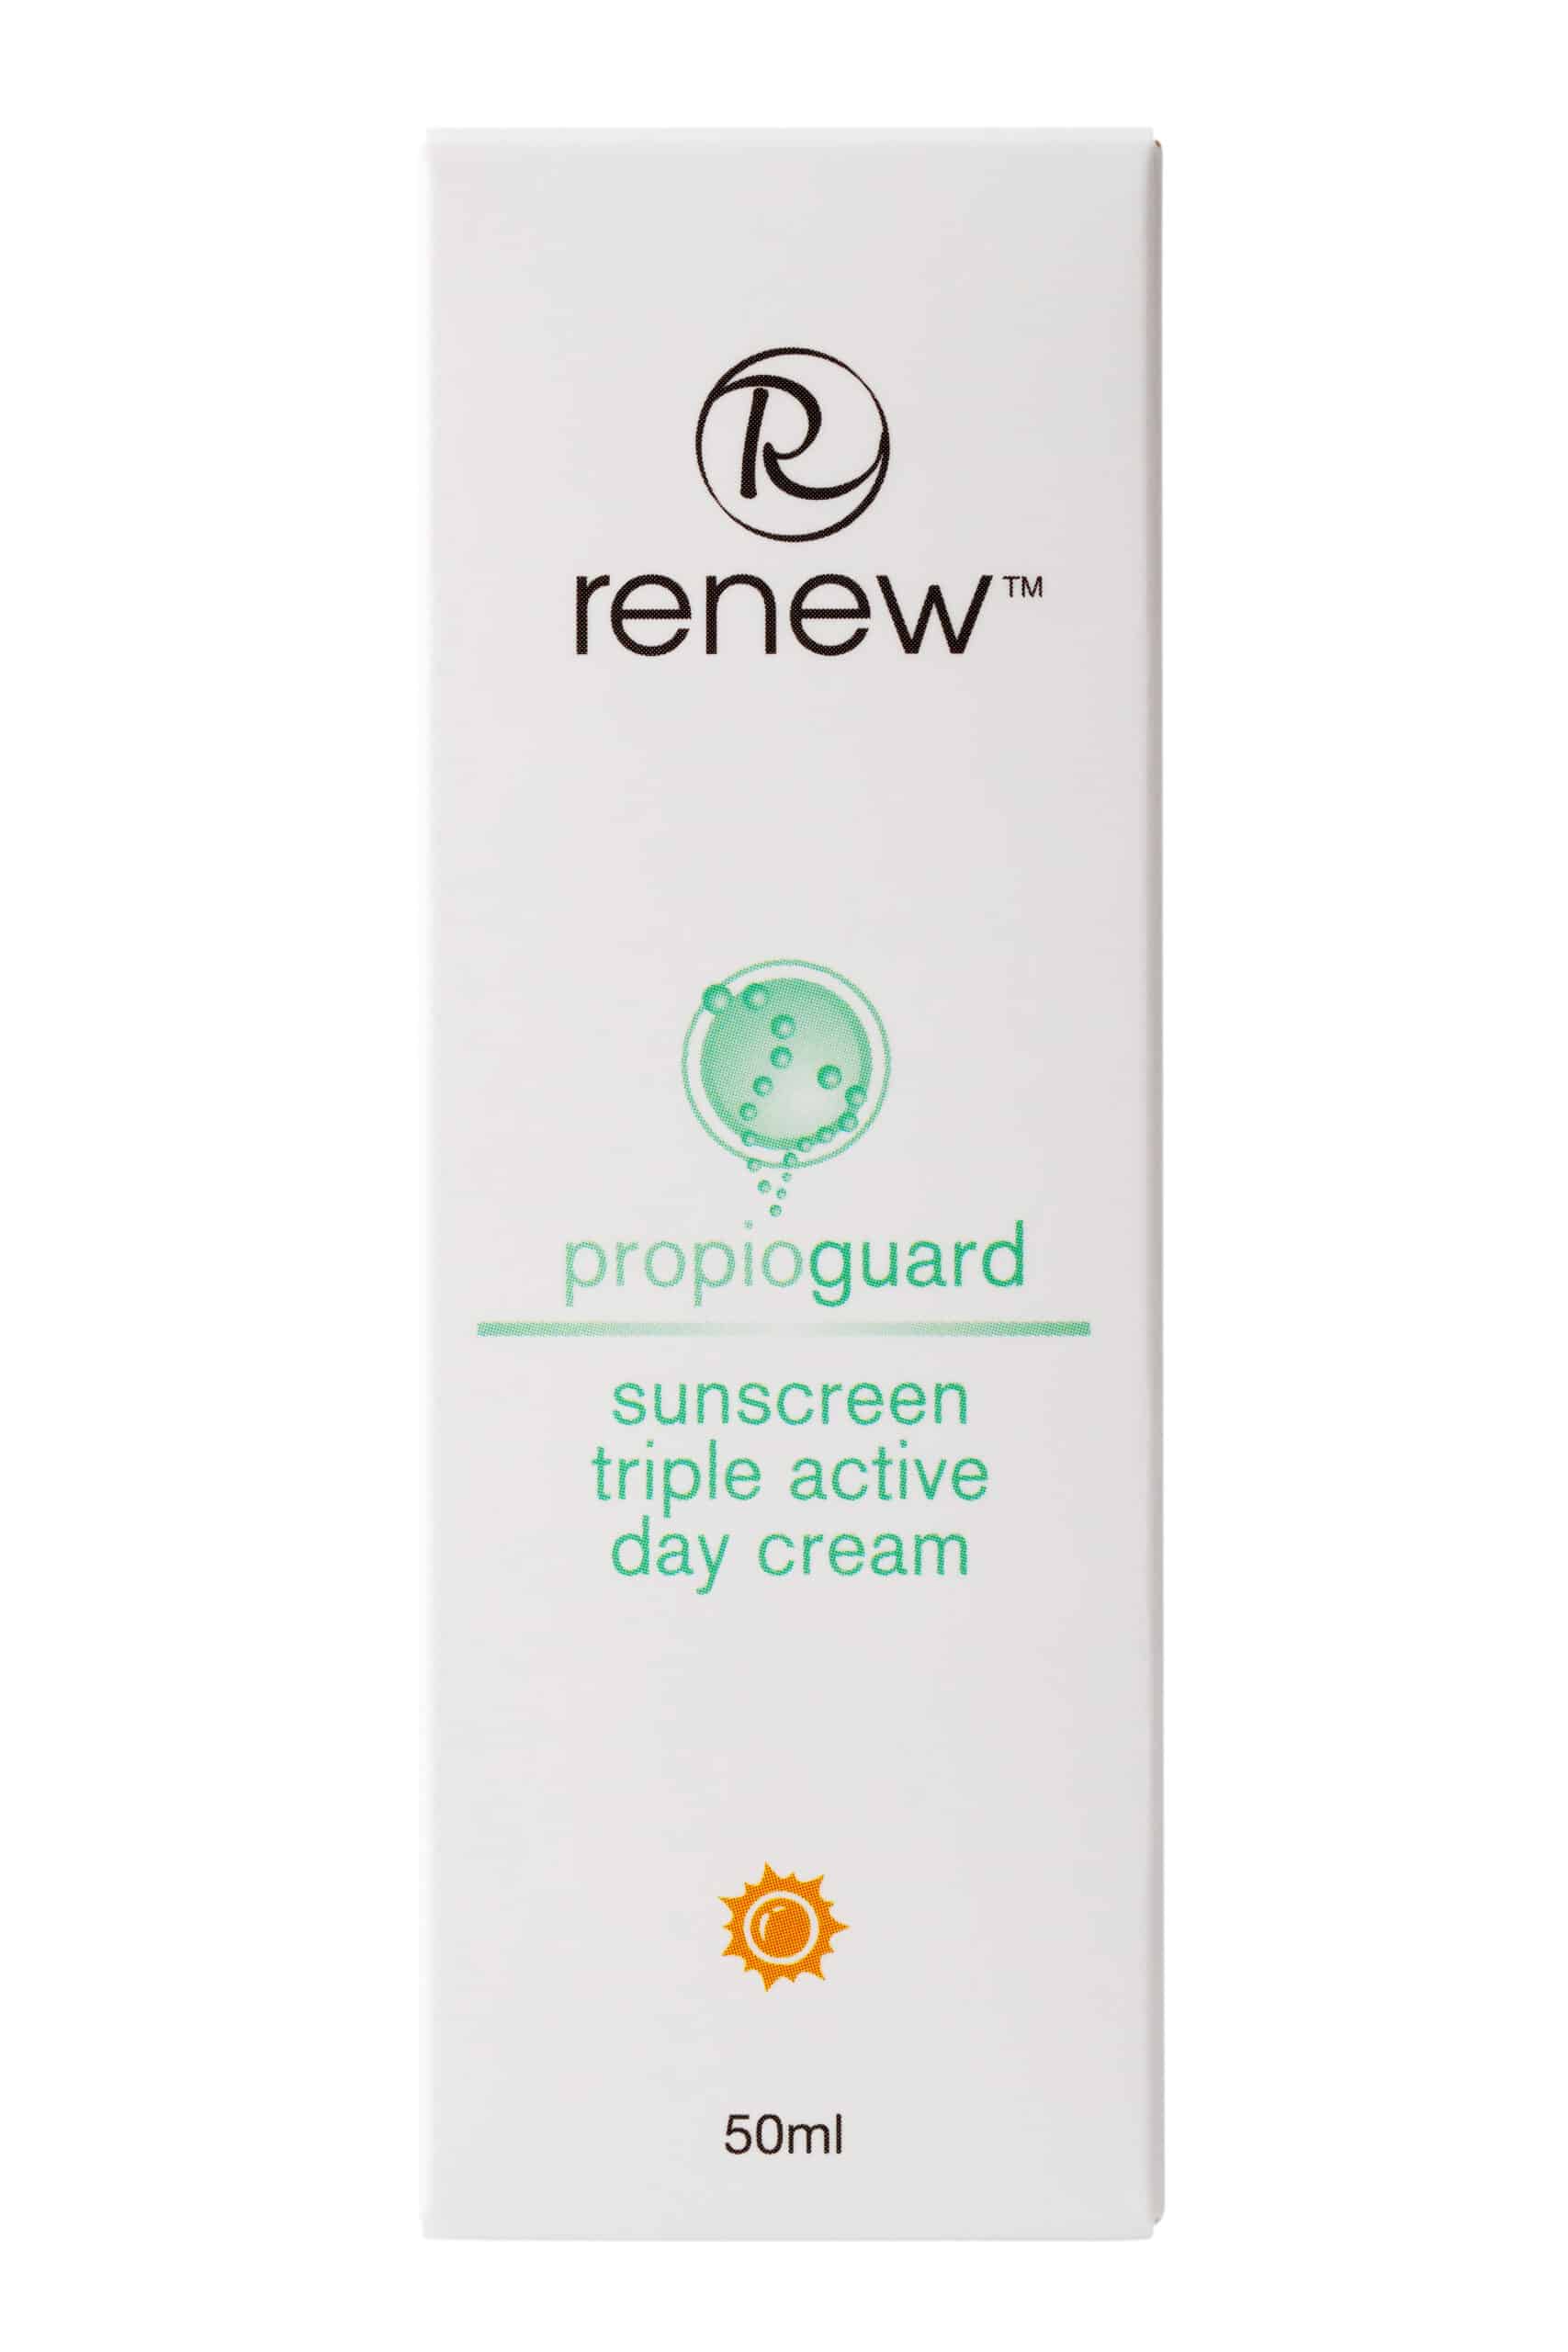 sunscreen-triple-active-day-cream-box